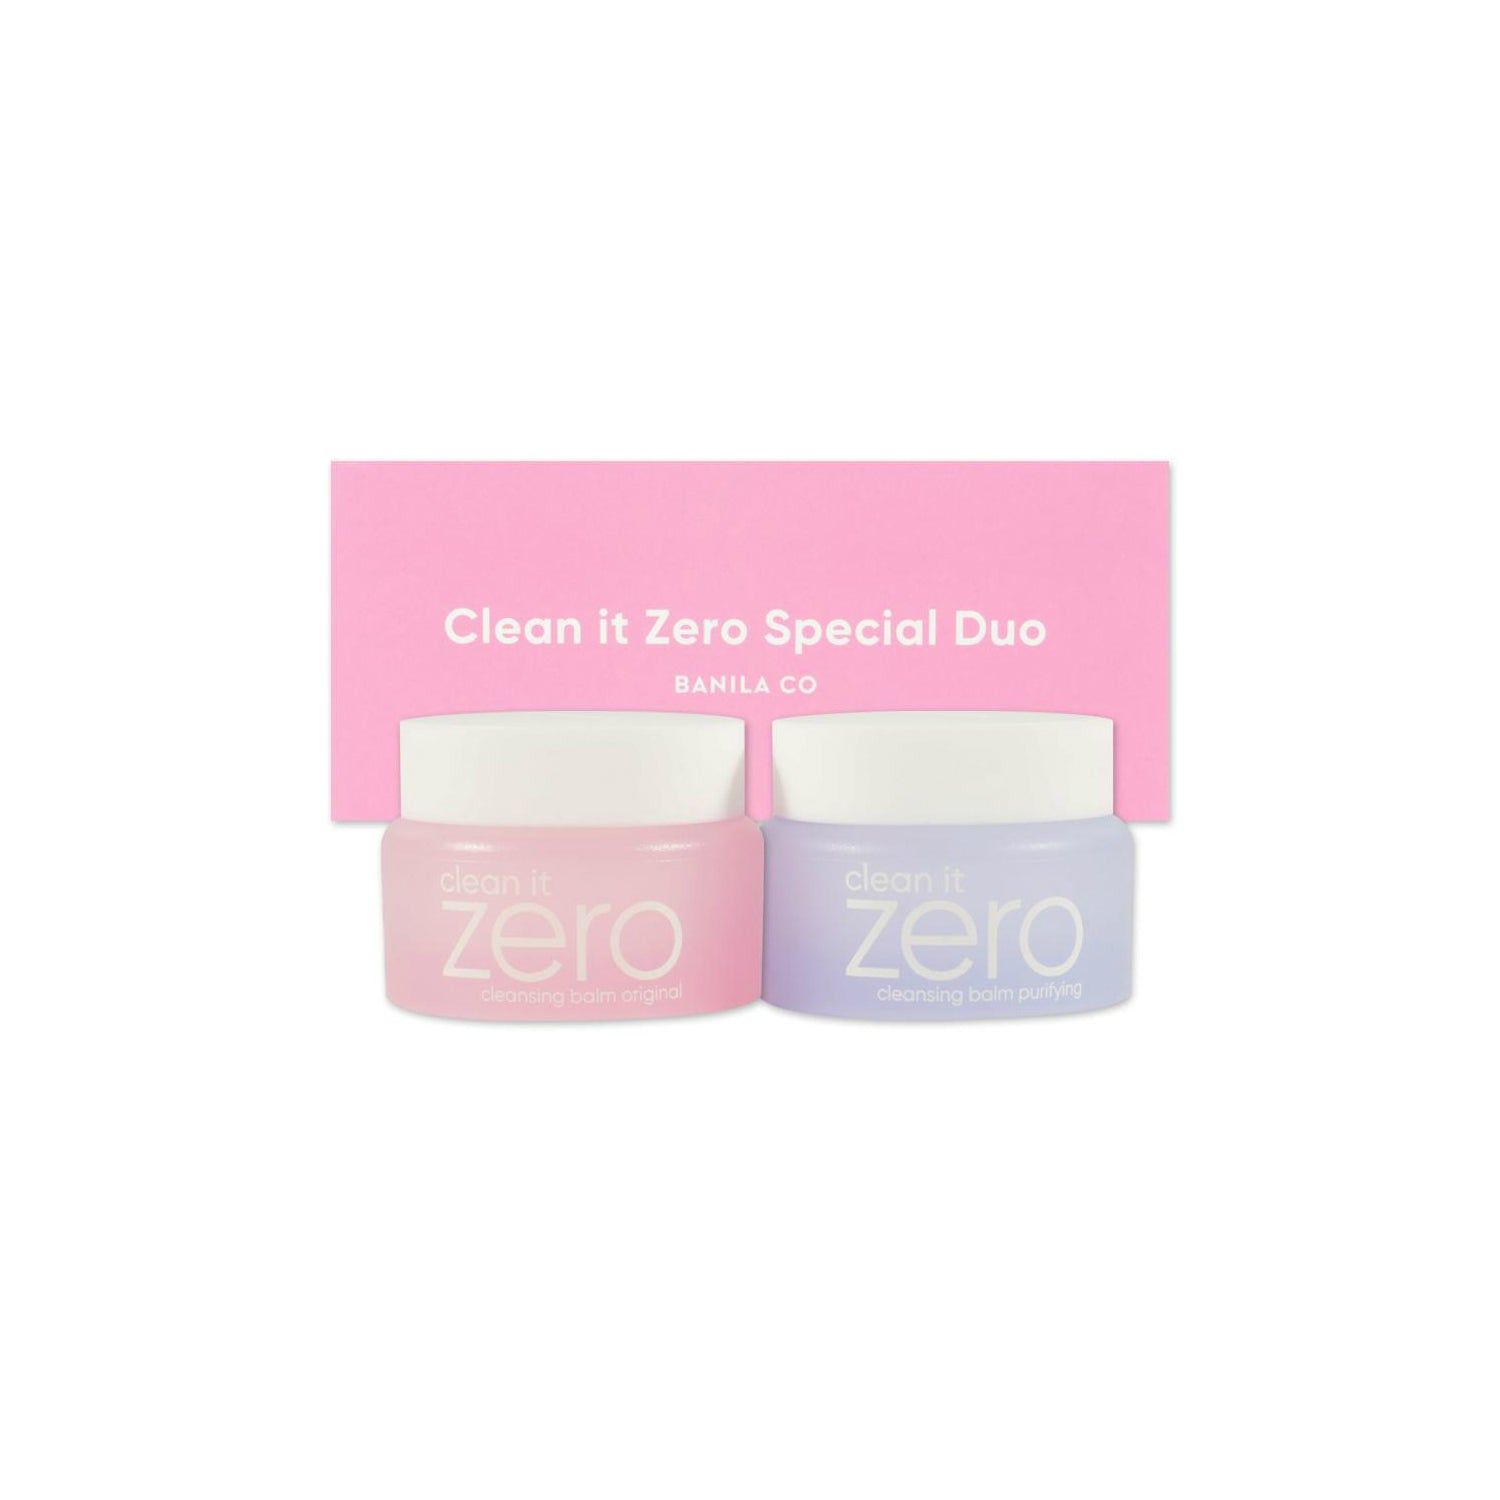 Banila Co. Clean it Zero Special Duo Mini Kit Beauty Banila Co   